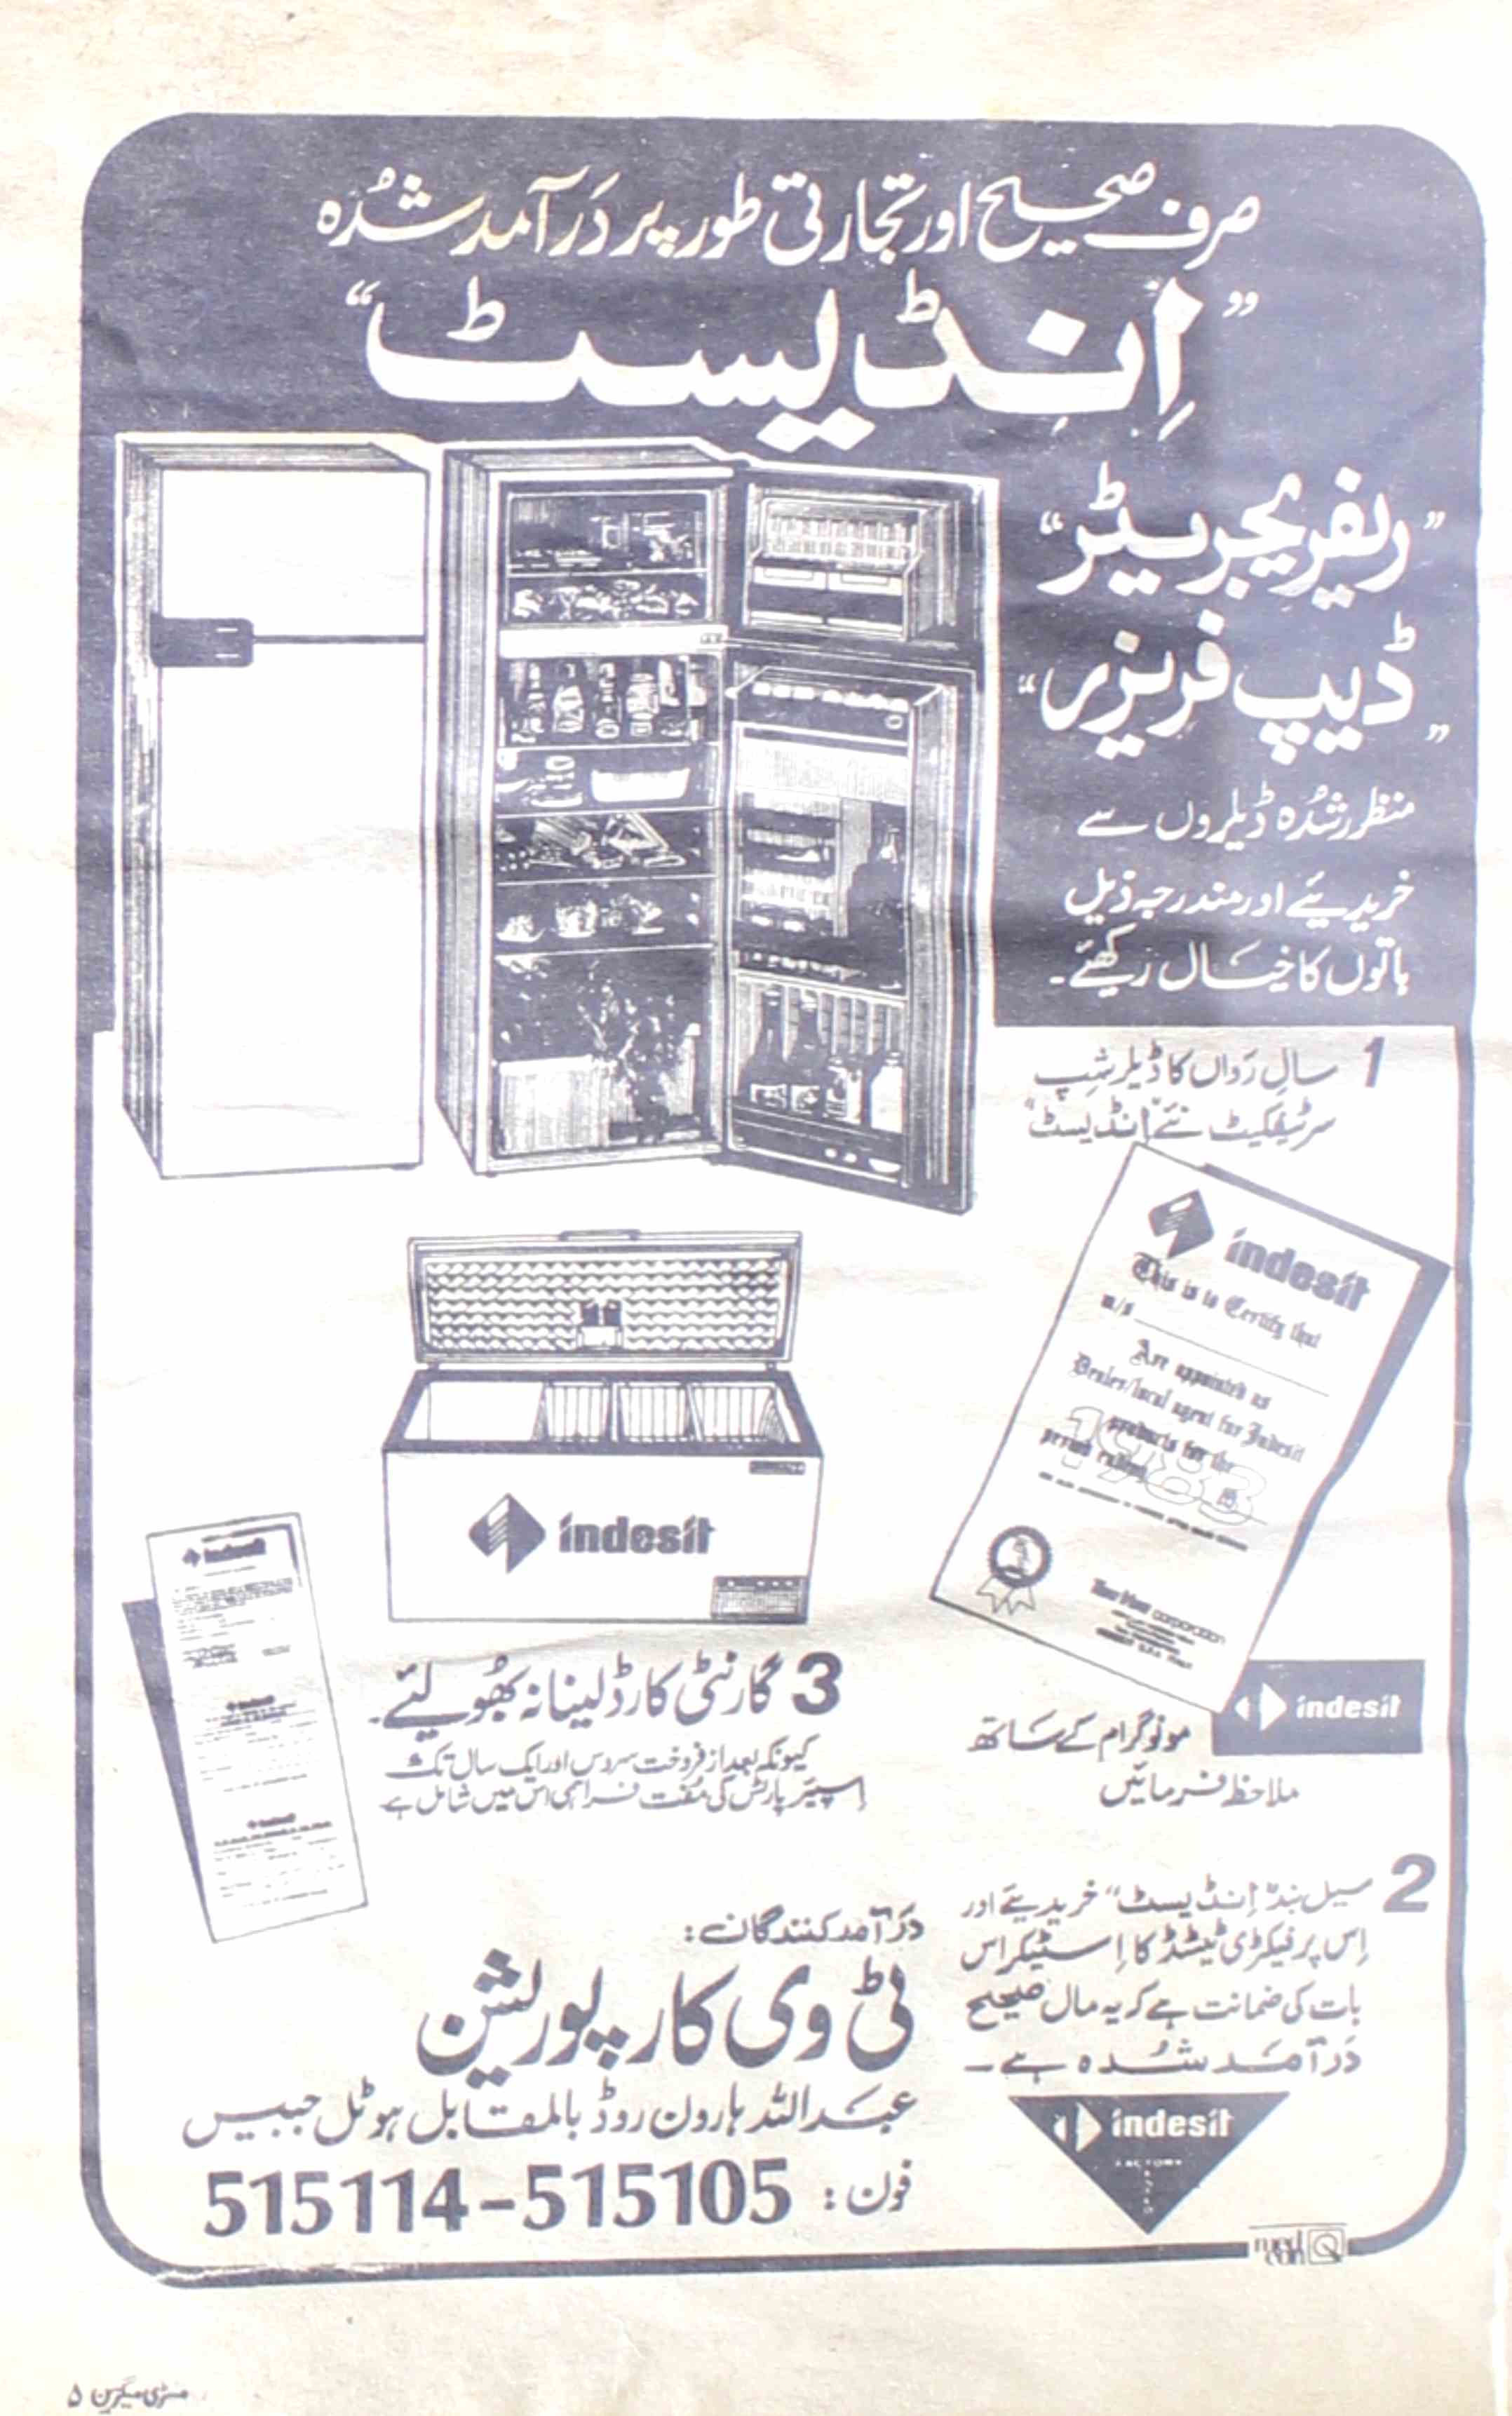 Mestry Magzine April 1984 SVK-Shumara Number-000